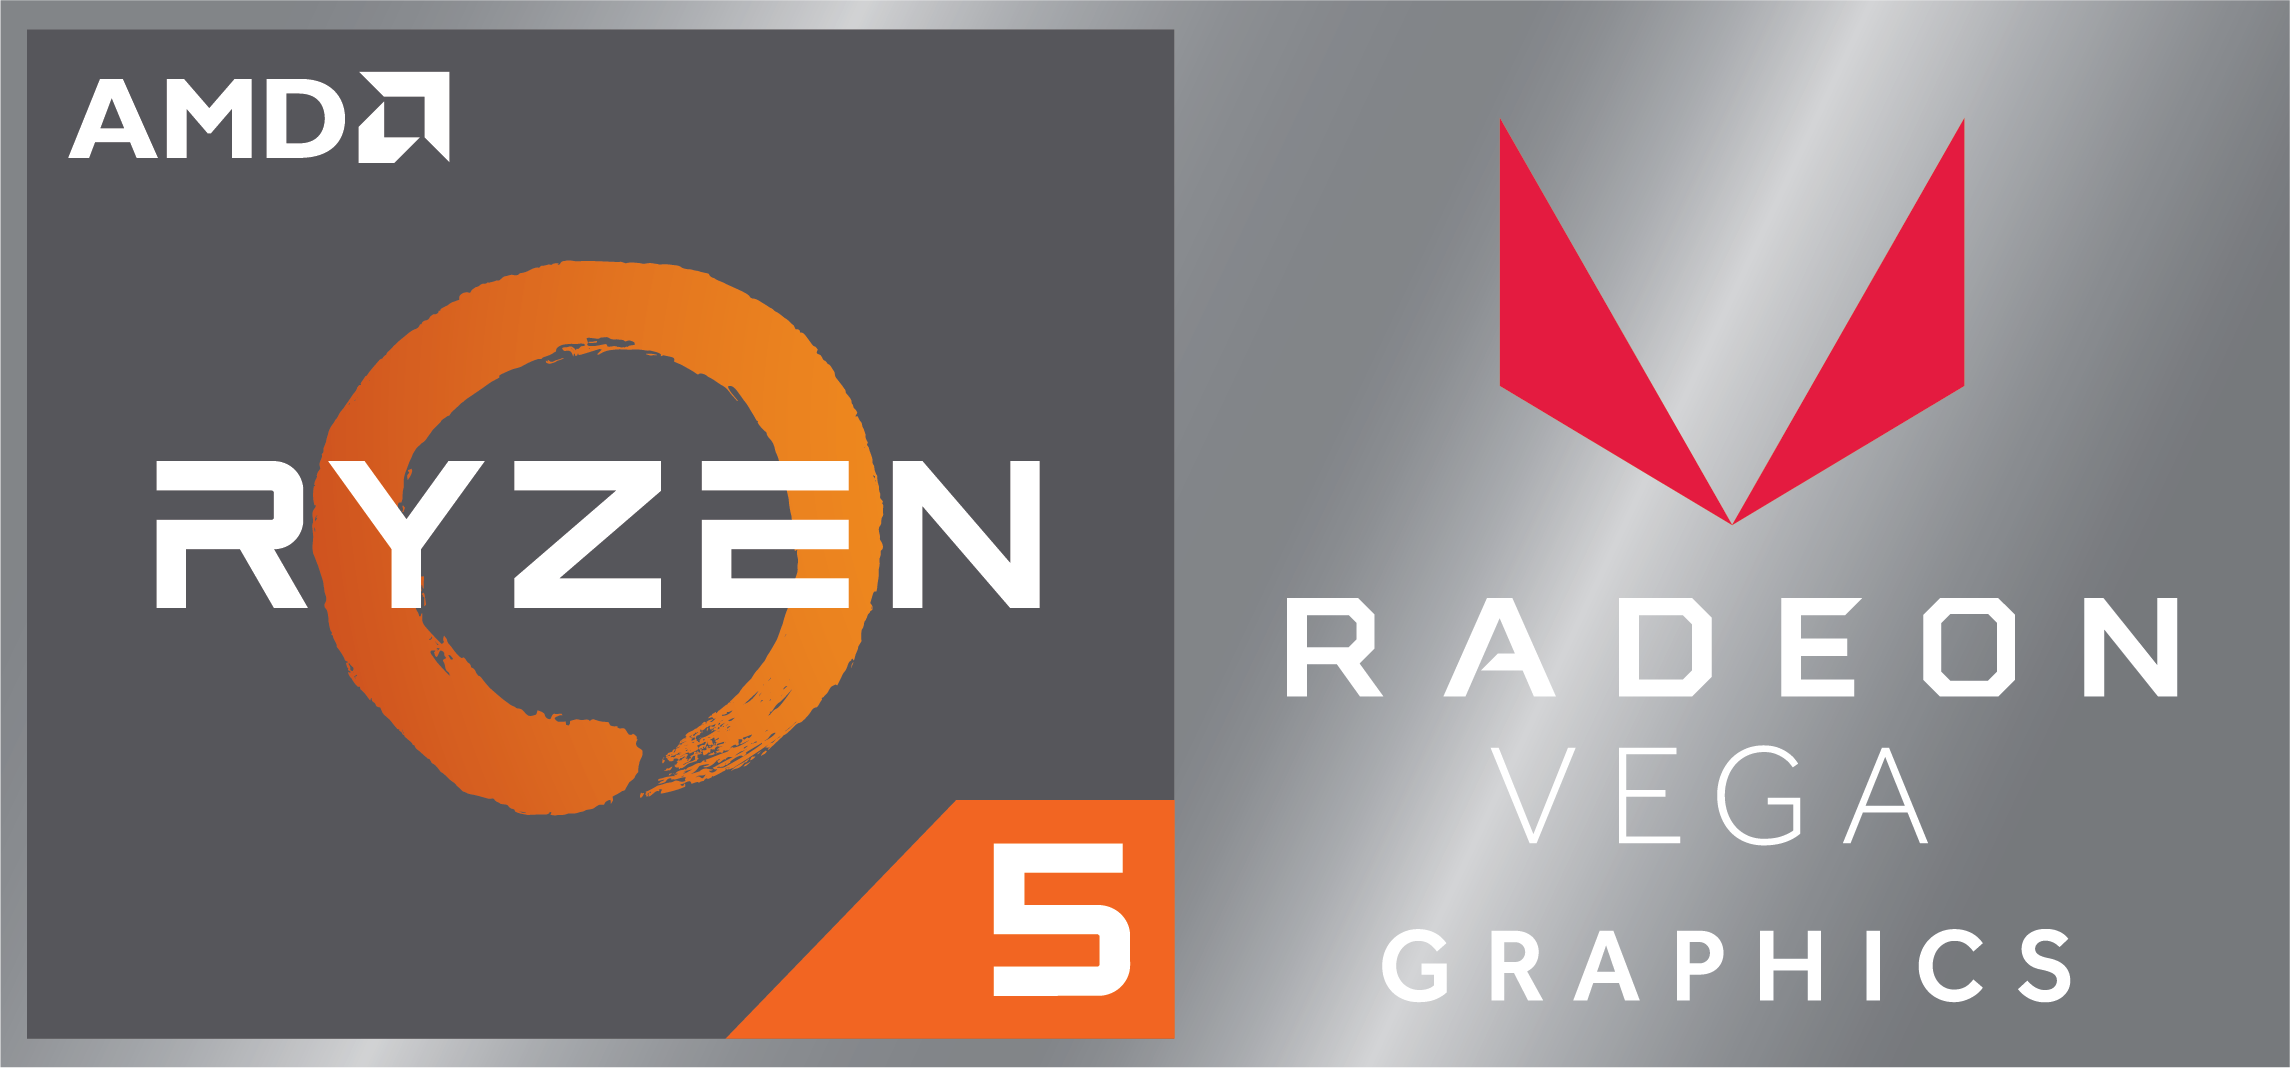 1758250 ryzen5 radonvega digbadge 5 AMD เปิดตัว Ryzen Mobile โปรเซสเซอร์ใหม่ที่เป็นขุมพลังสำหรับ Ultrathin Notebook1 ที่เร็วที่สุดในโลก